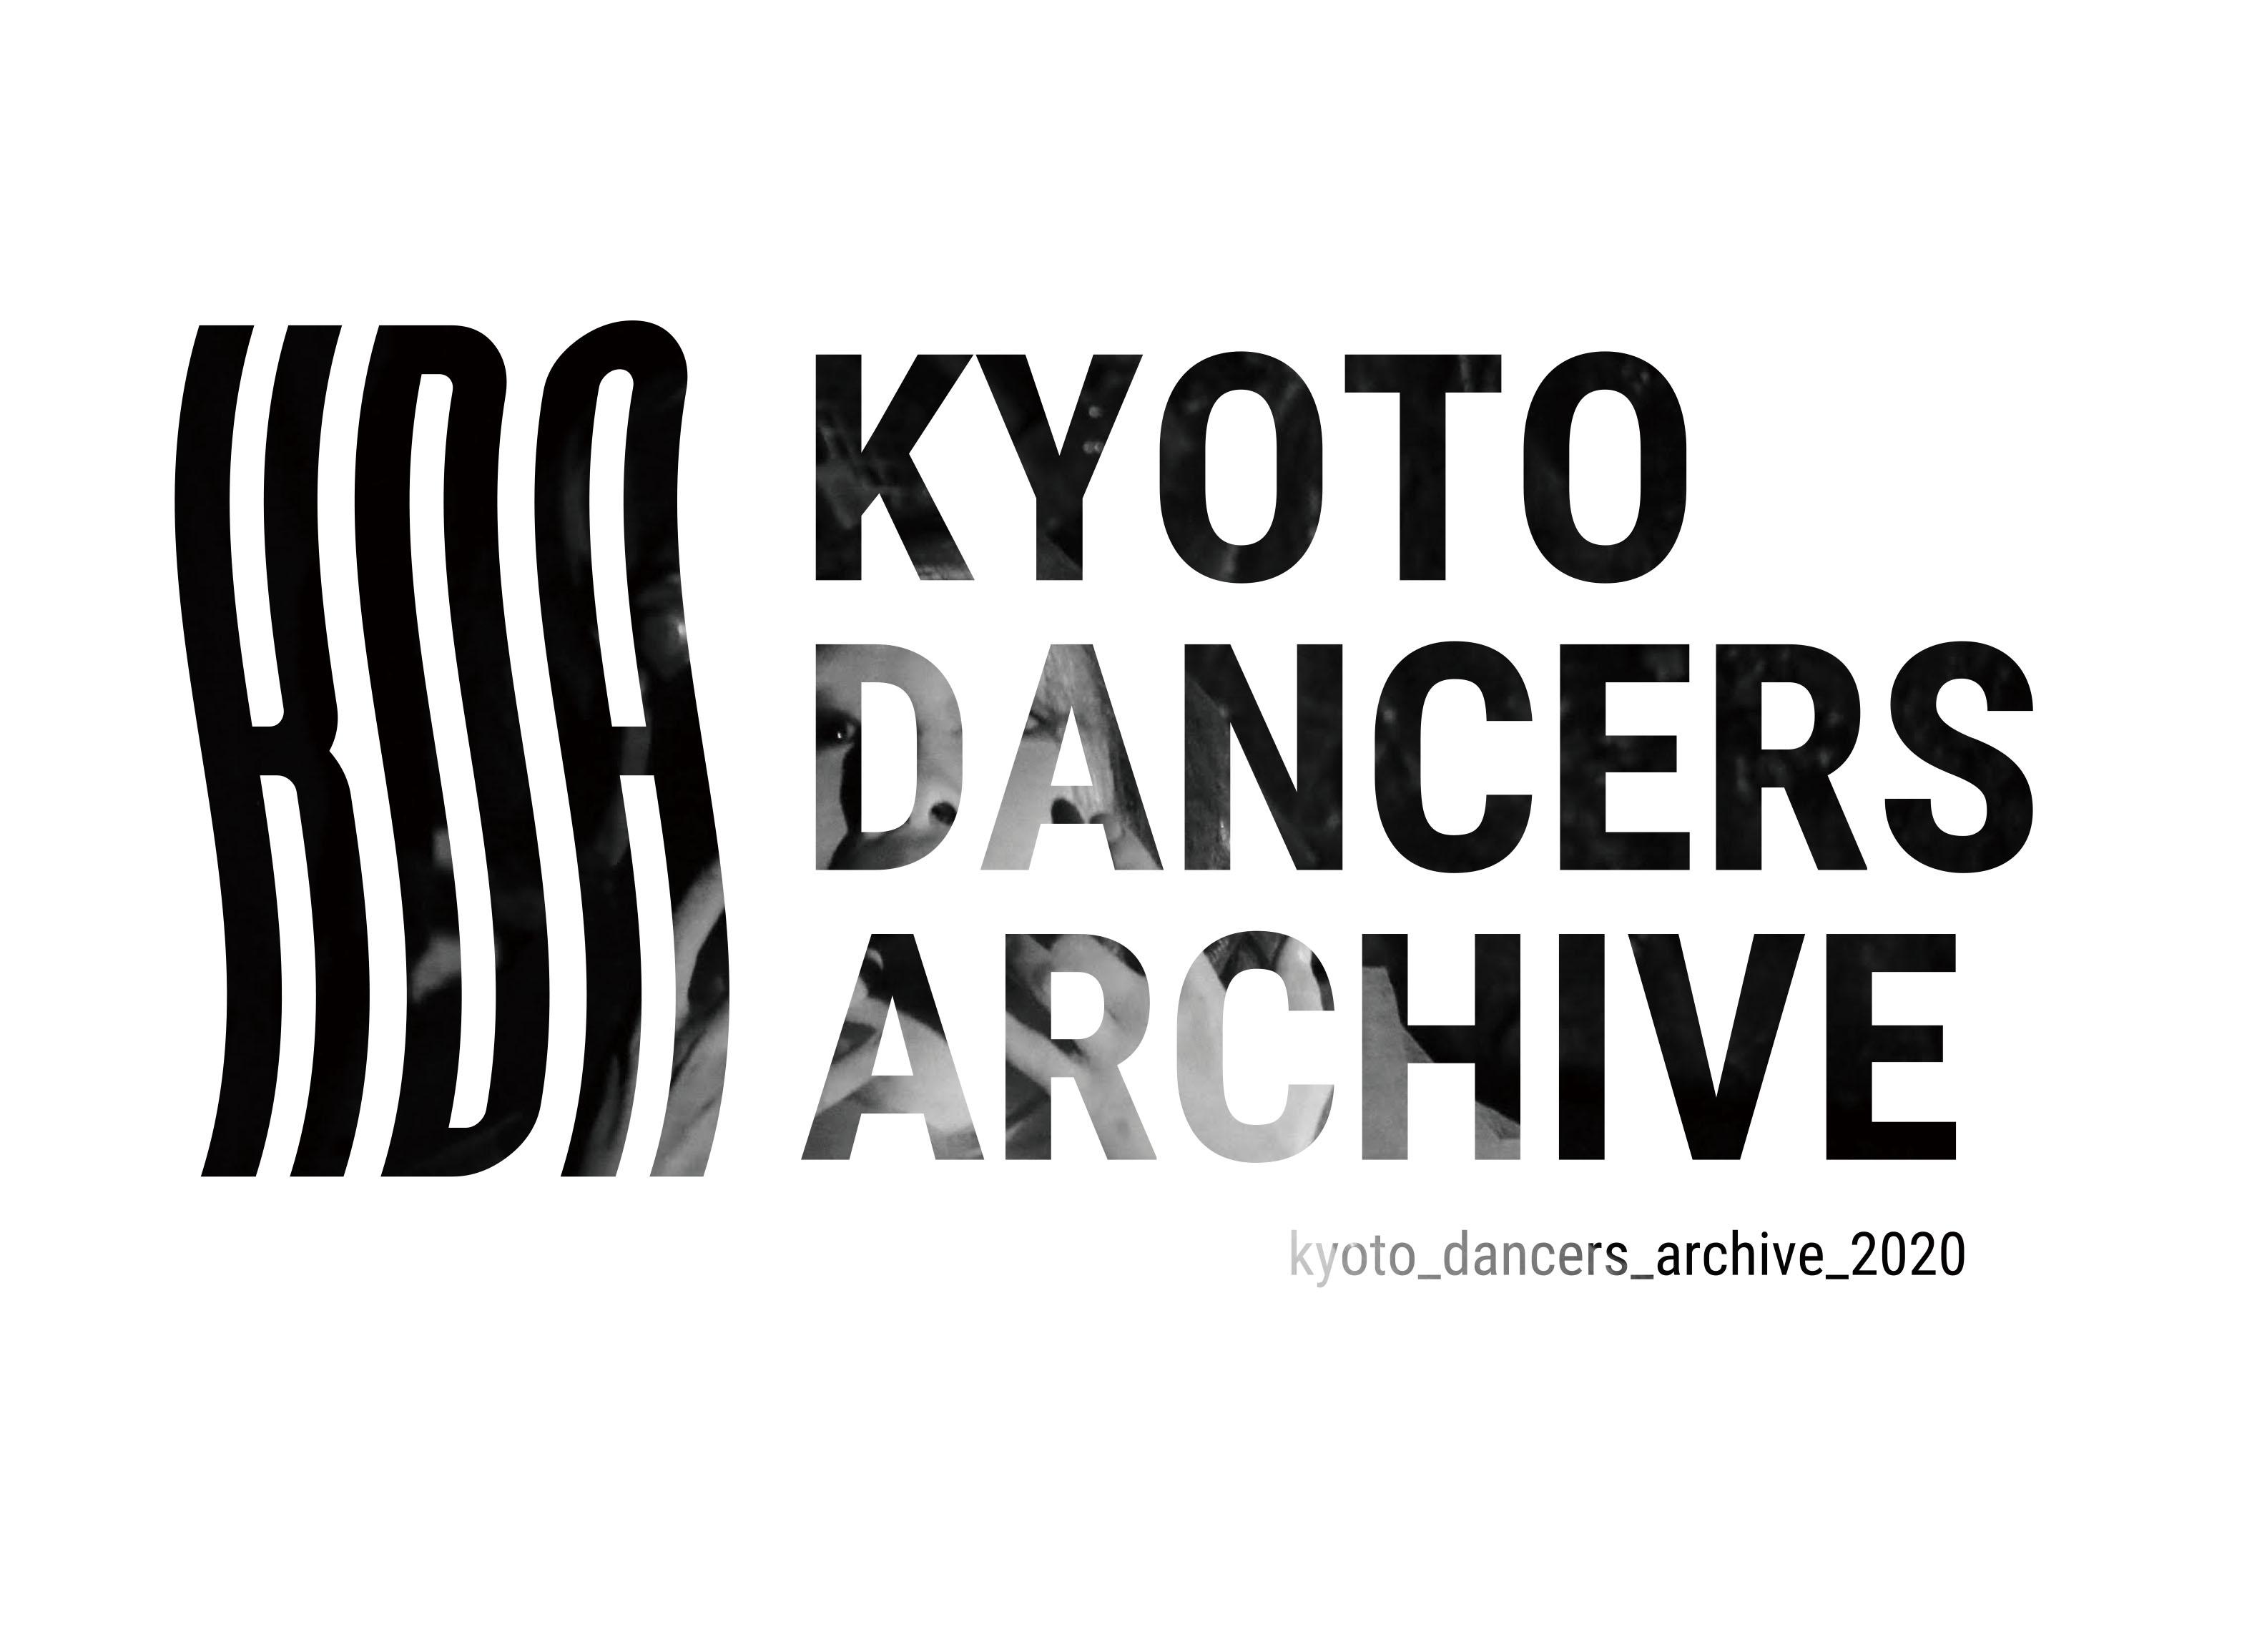 KYOTO DANCERS ARCHIVE 2020